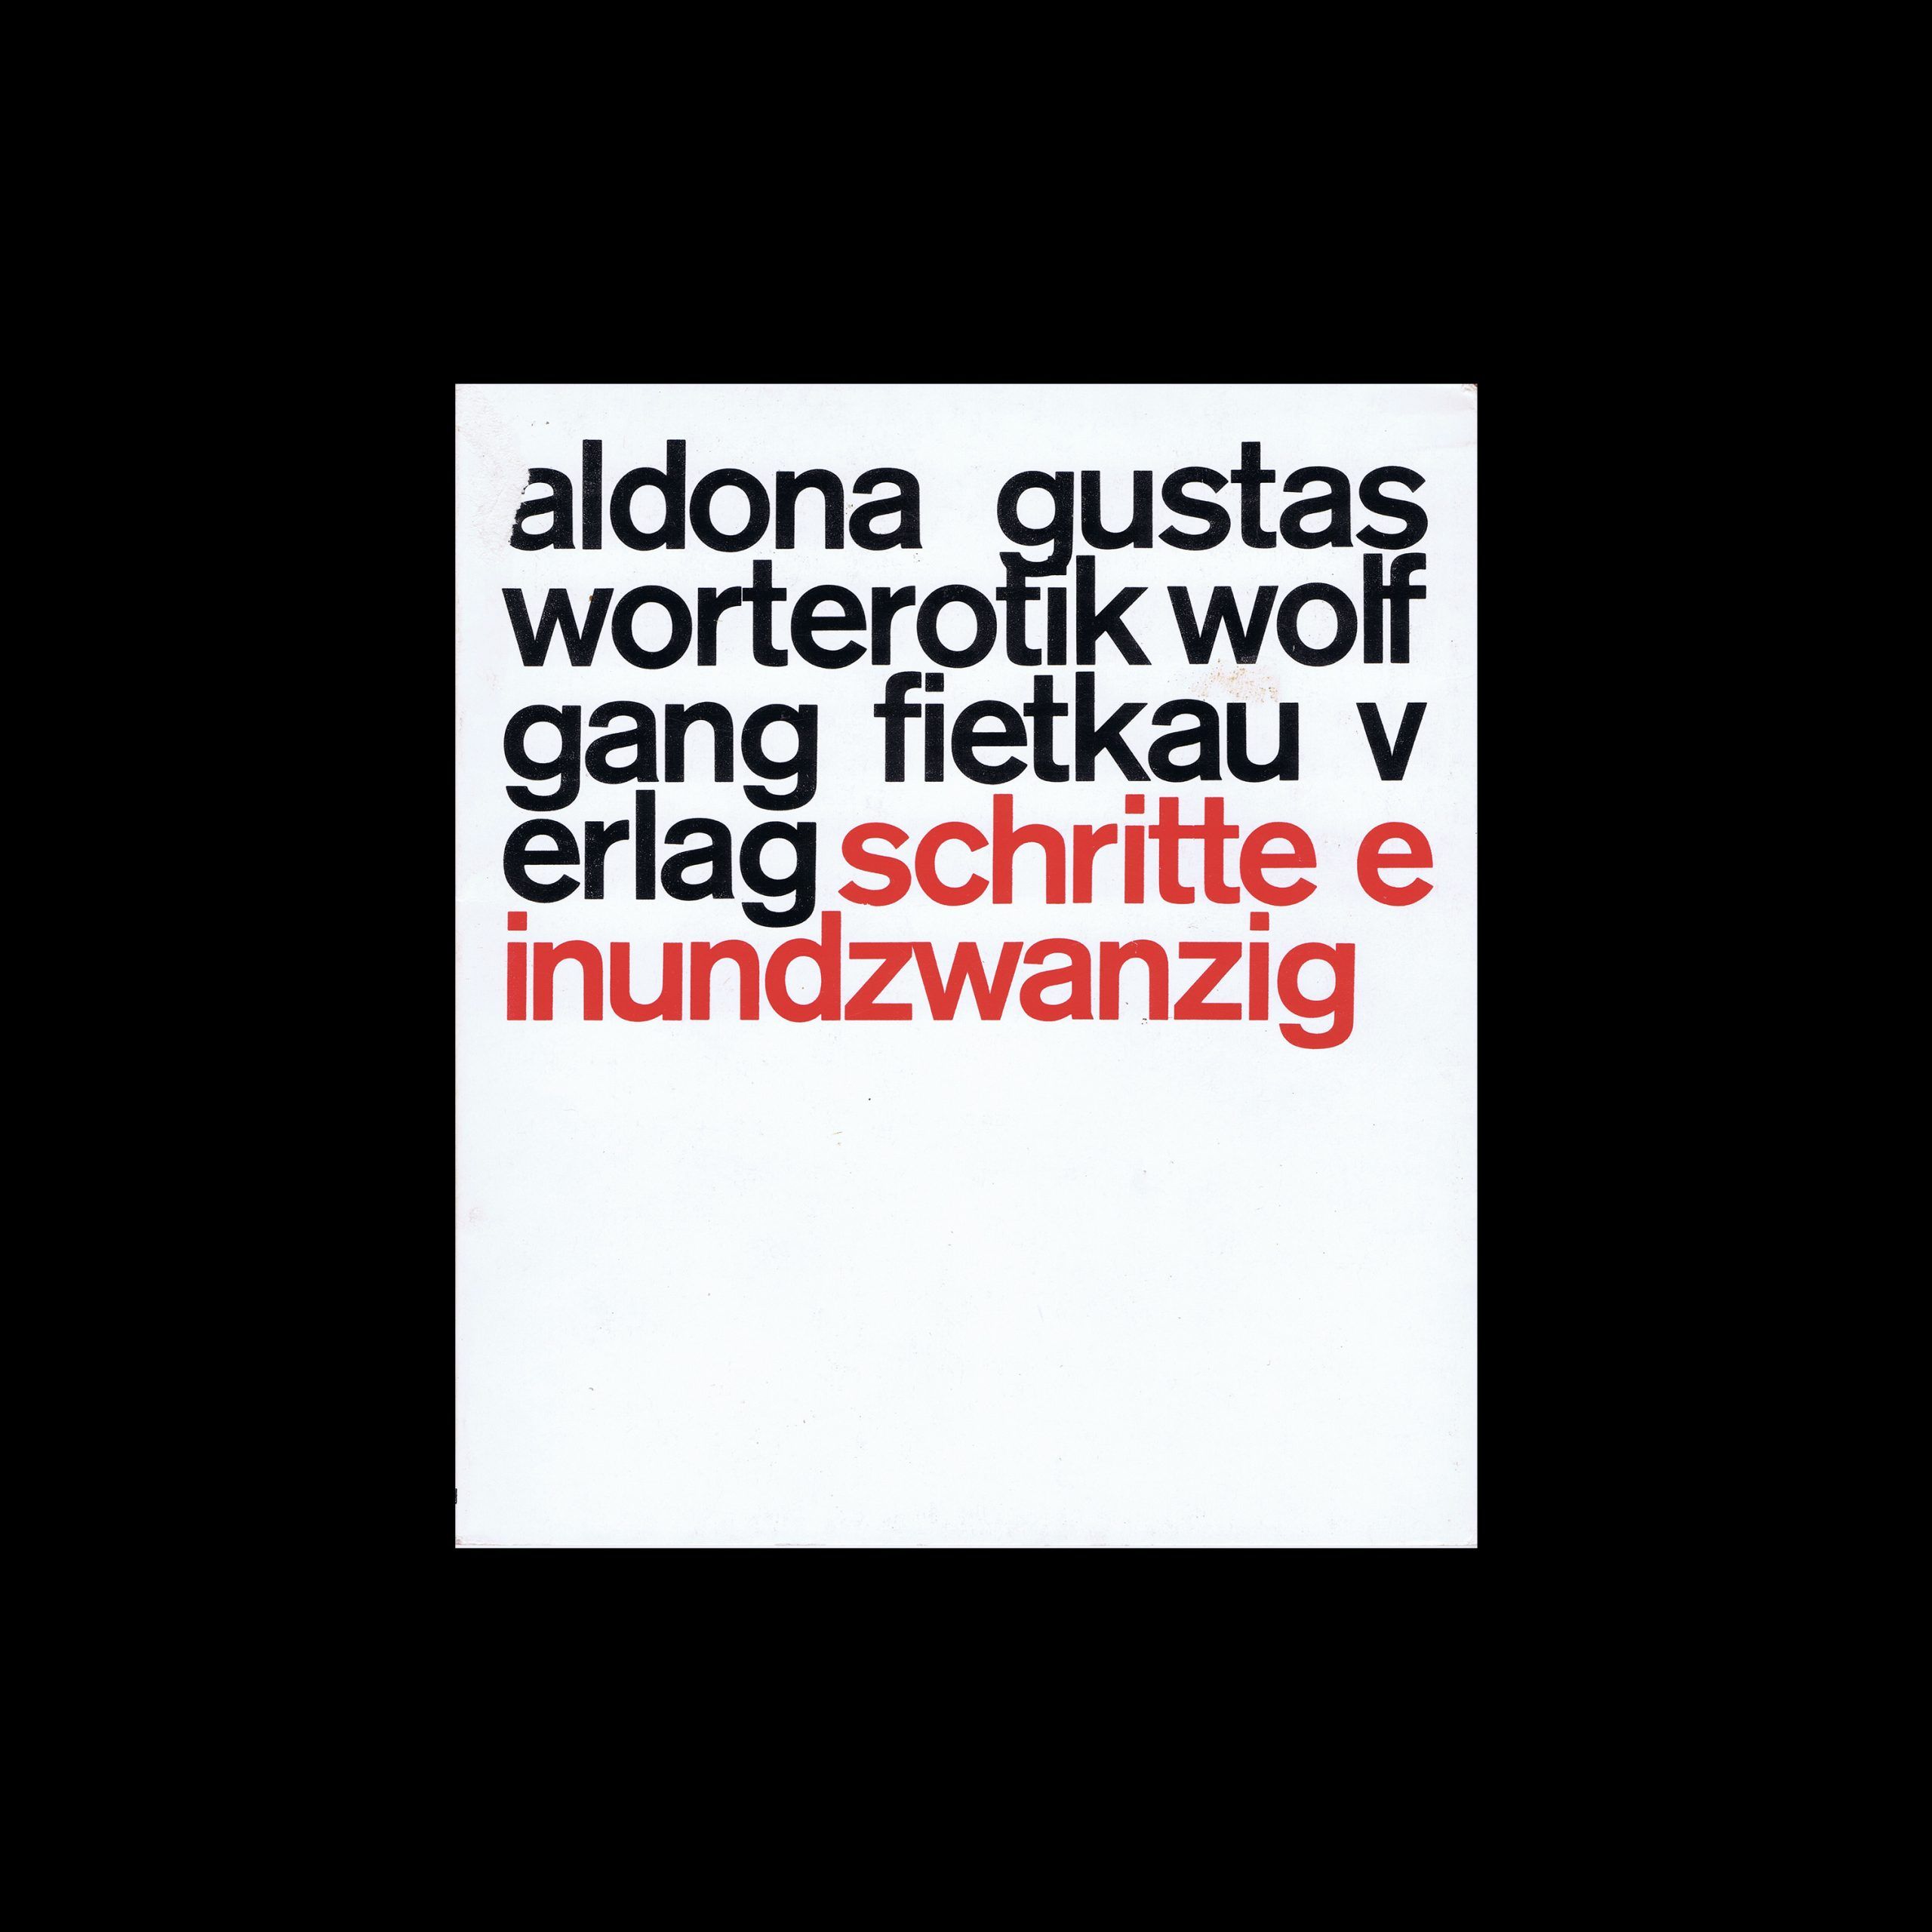 Aldona Gustas, Worterotik, Wolfgang Fietkau Verlag, 1971. Designed by Christian Chruxin